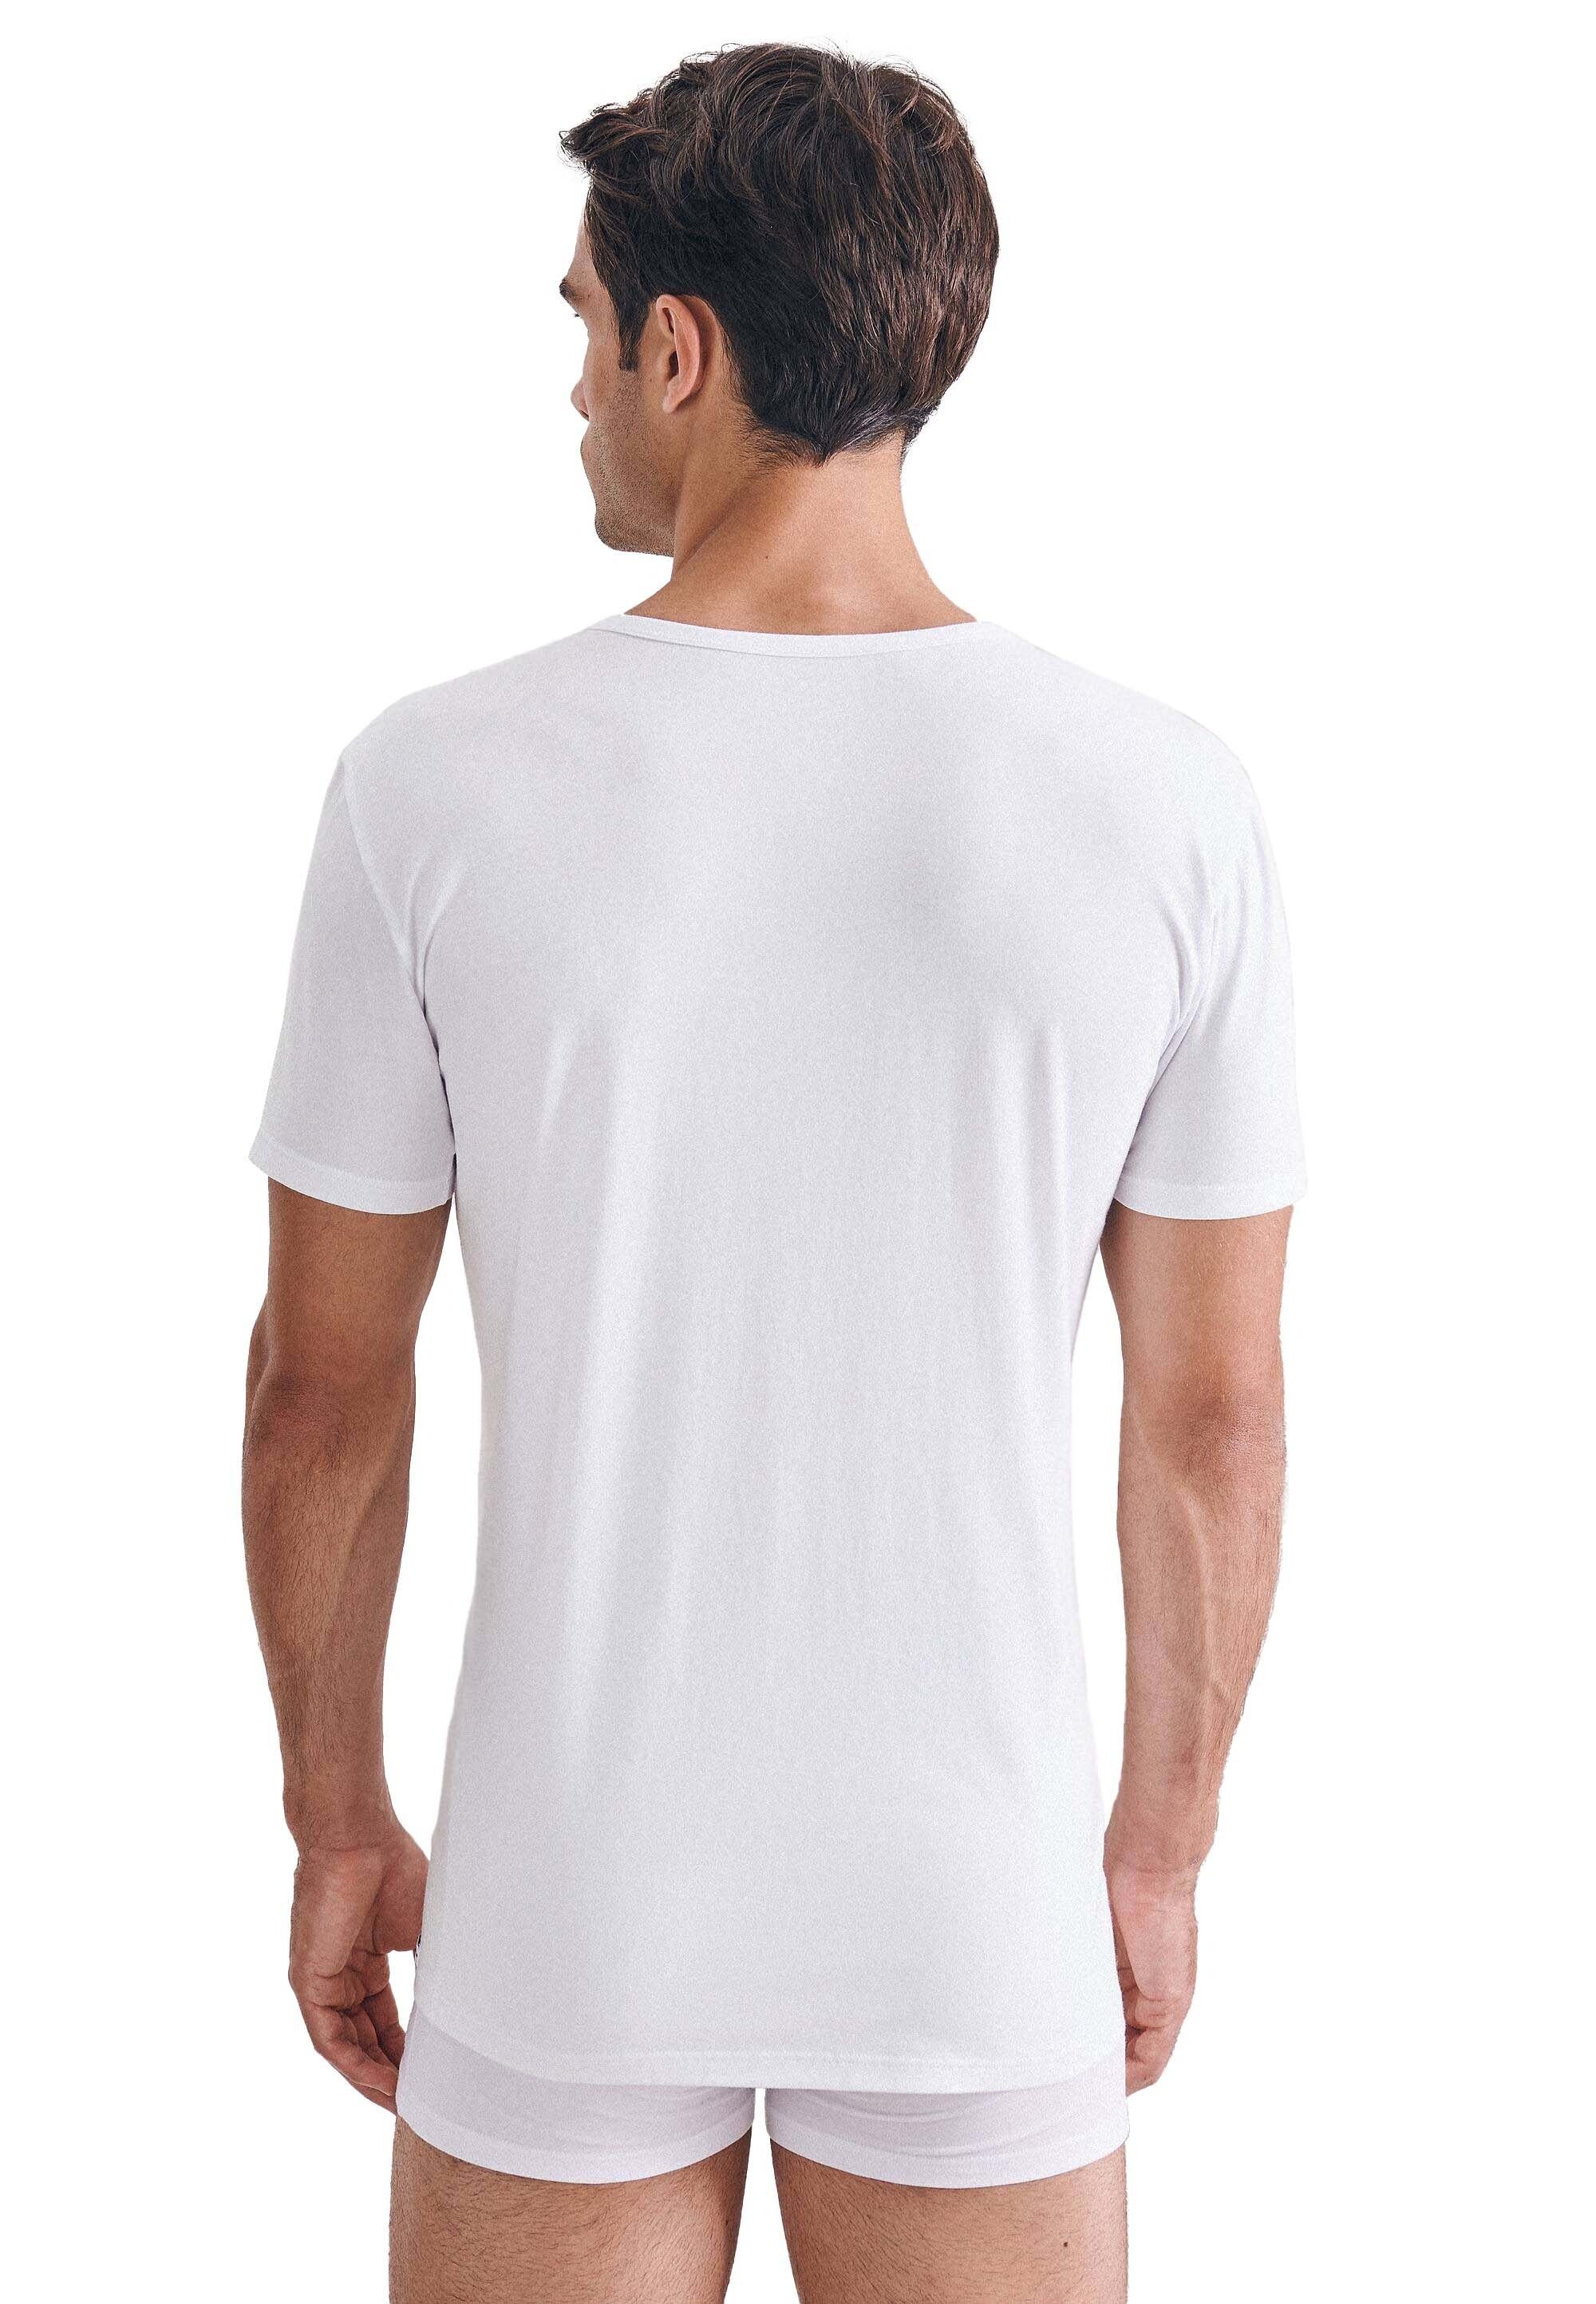 Herren - 2er Unterhemd T-Shirt, Cotton Comfort seidensticker Pack